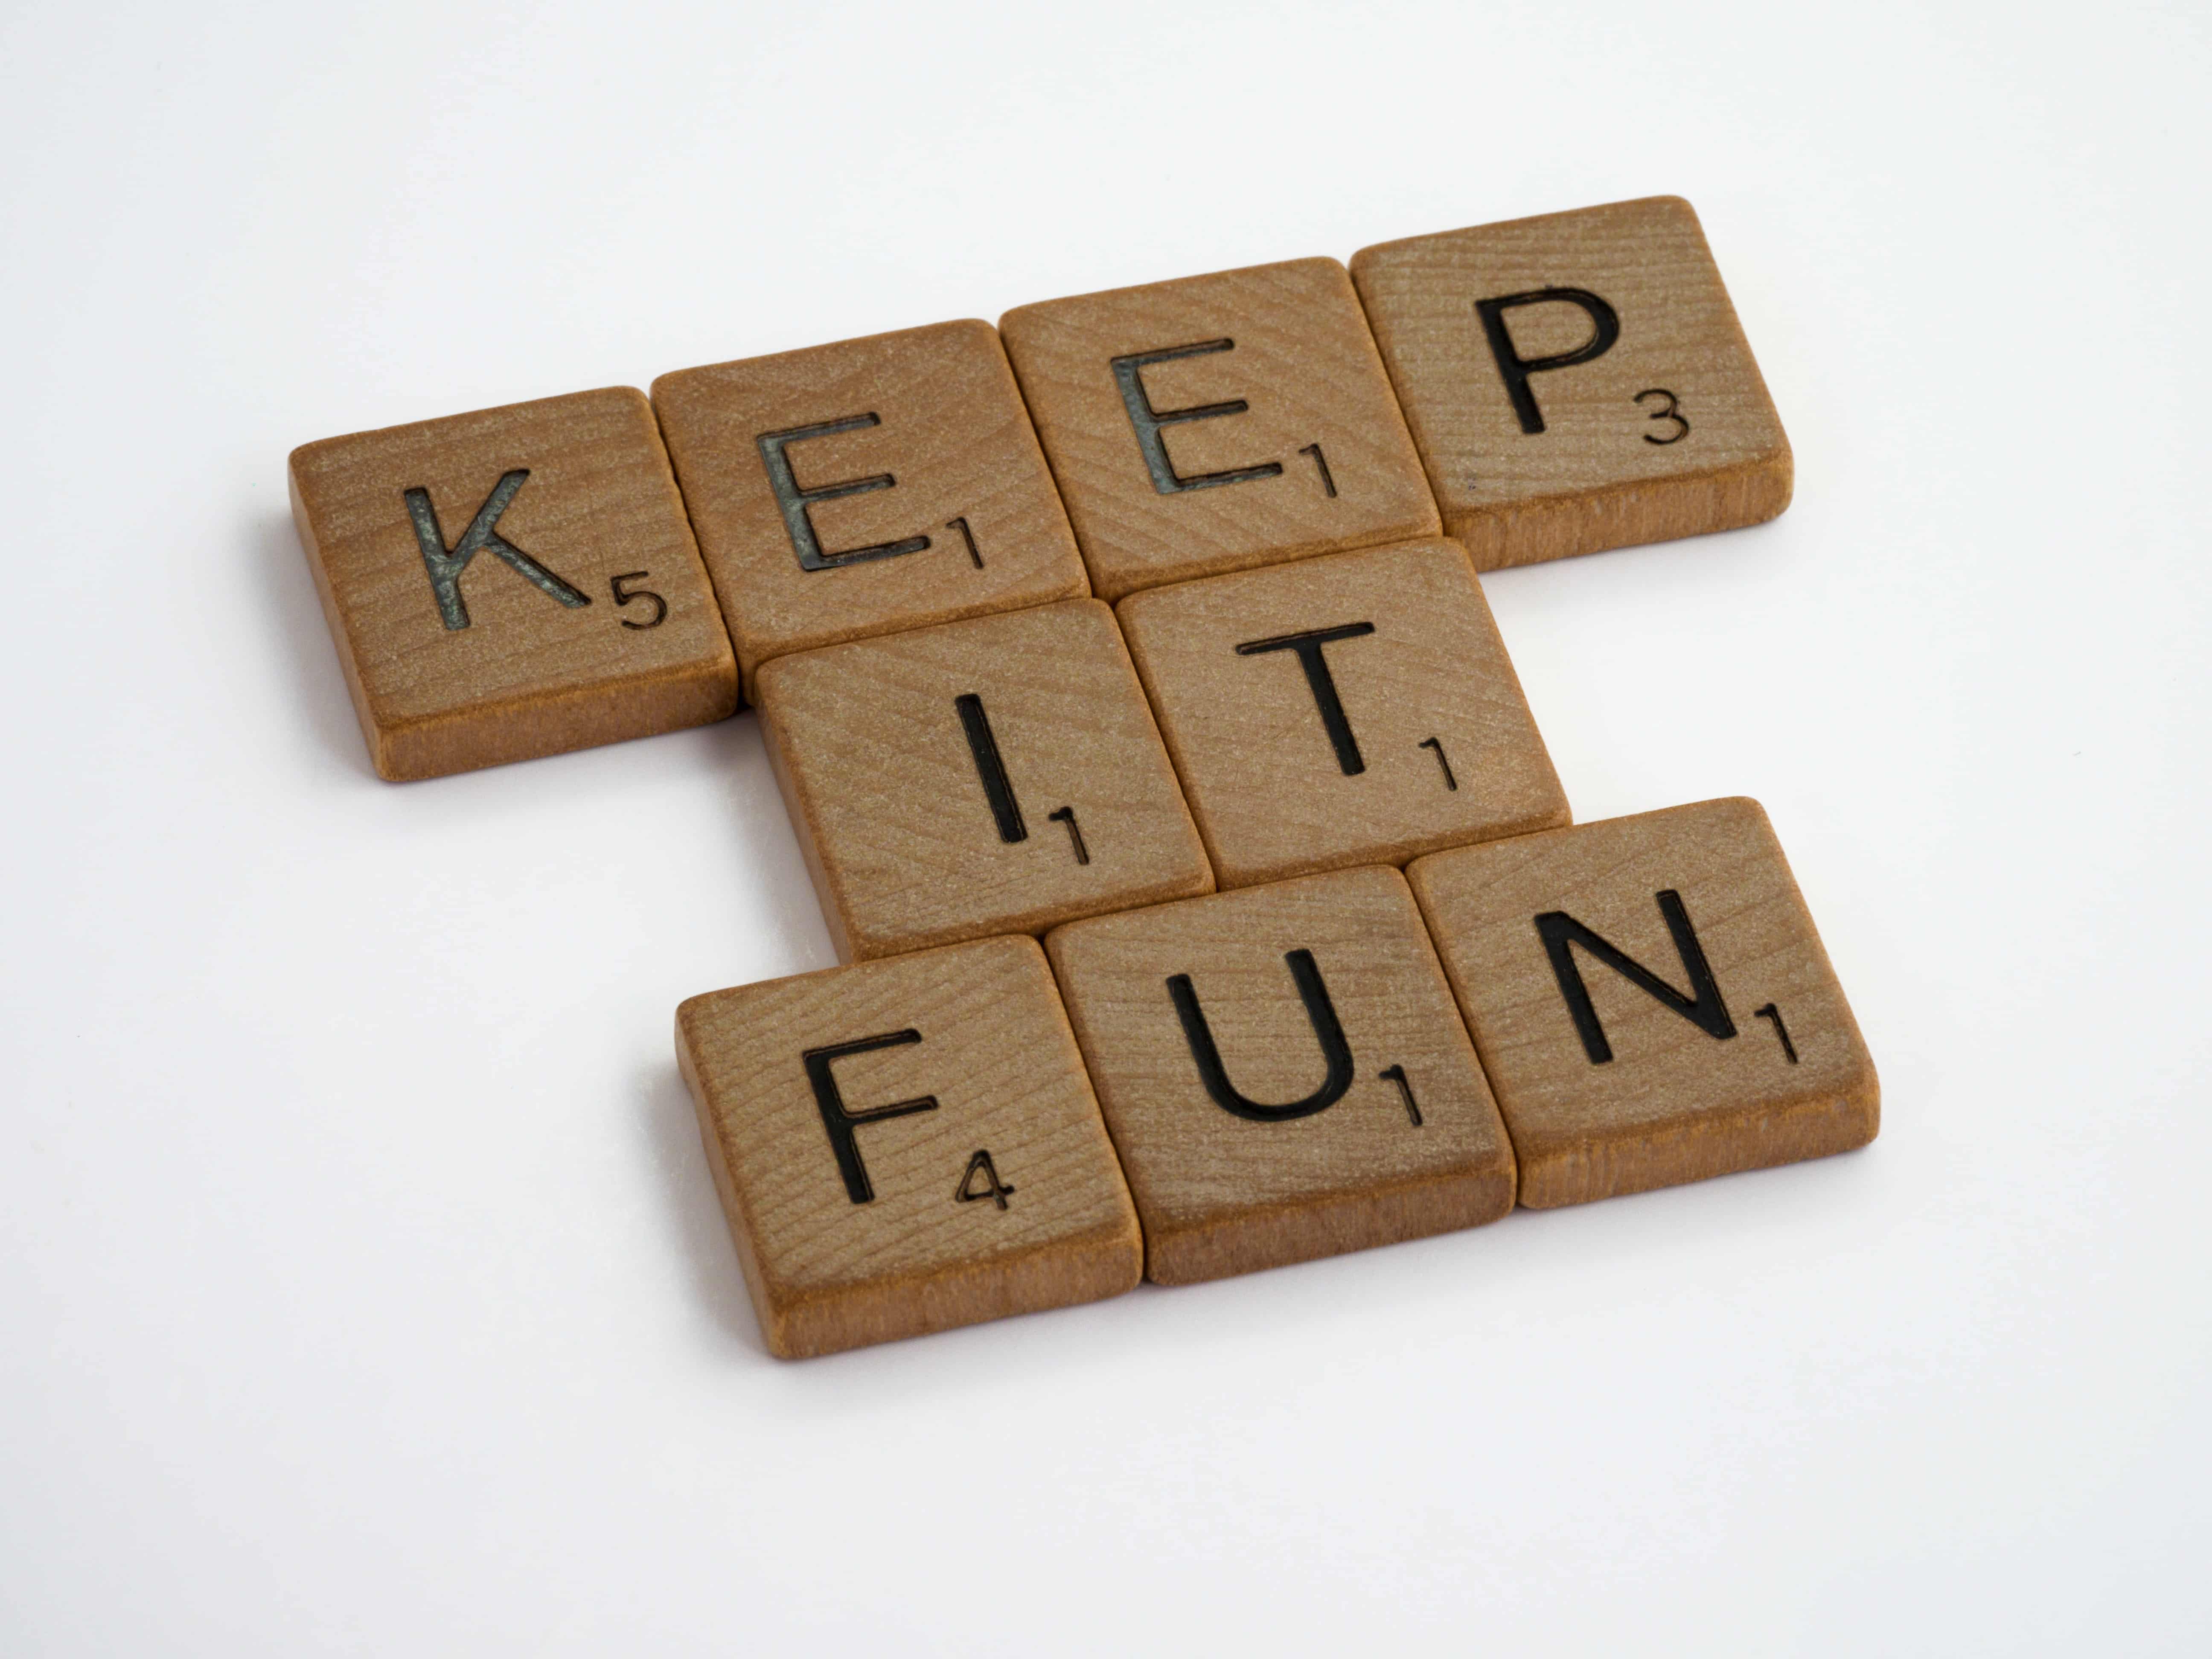 Scrabble letters spelling out "keep it fun"